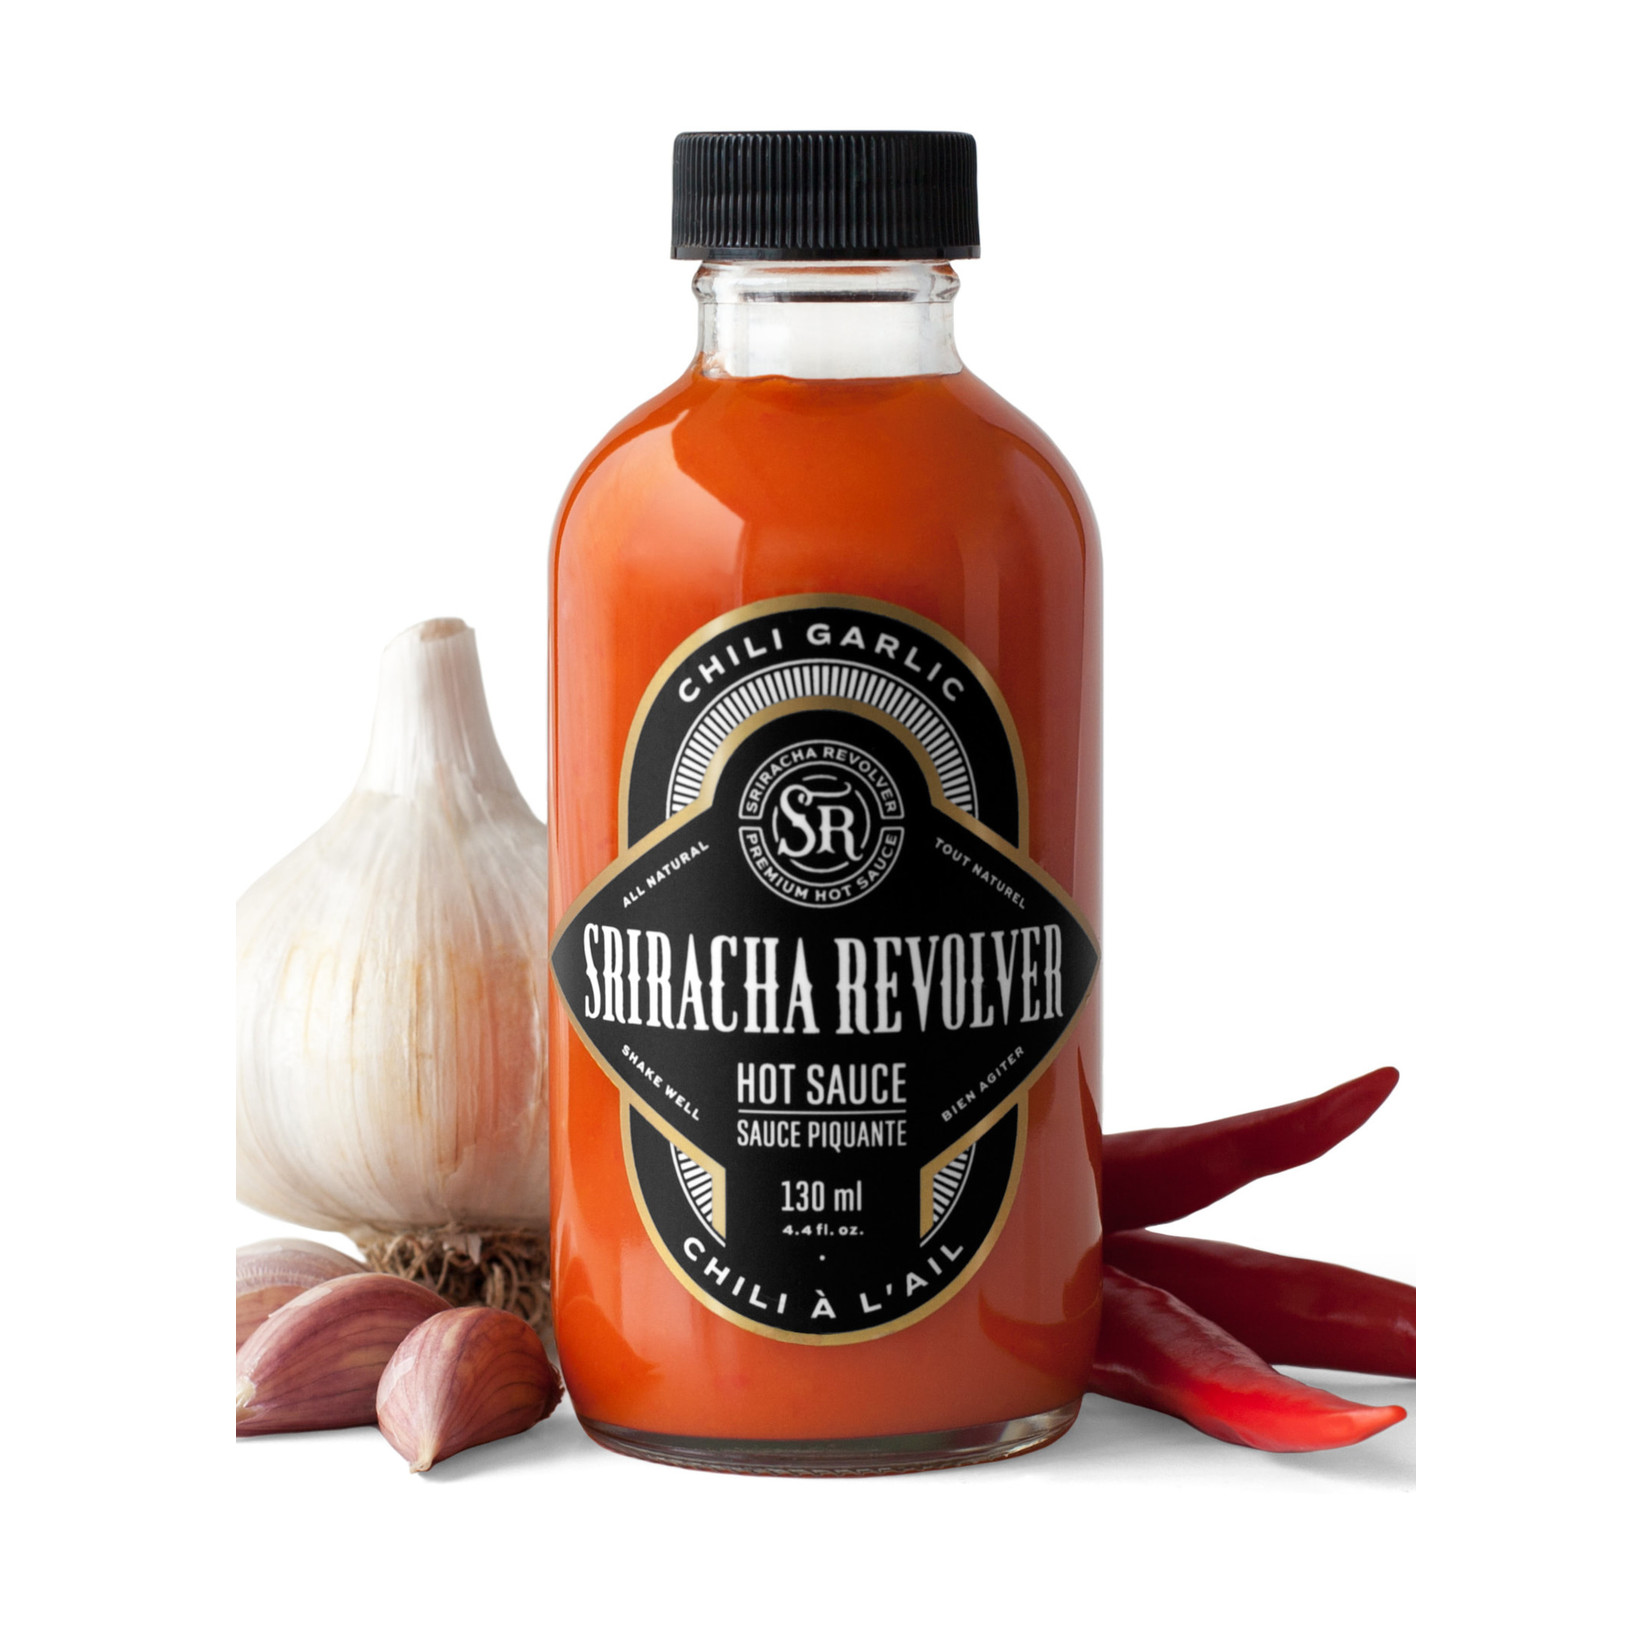 Sriracha Revolver Hot Sauce Inc. Chili Garlic Hot Sauce